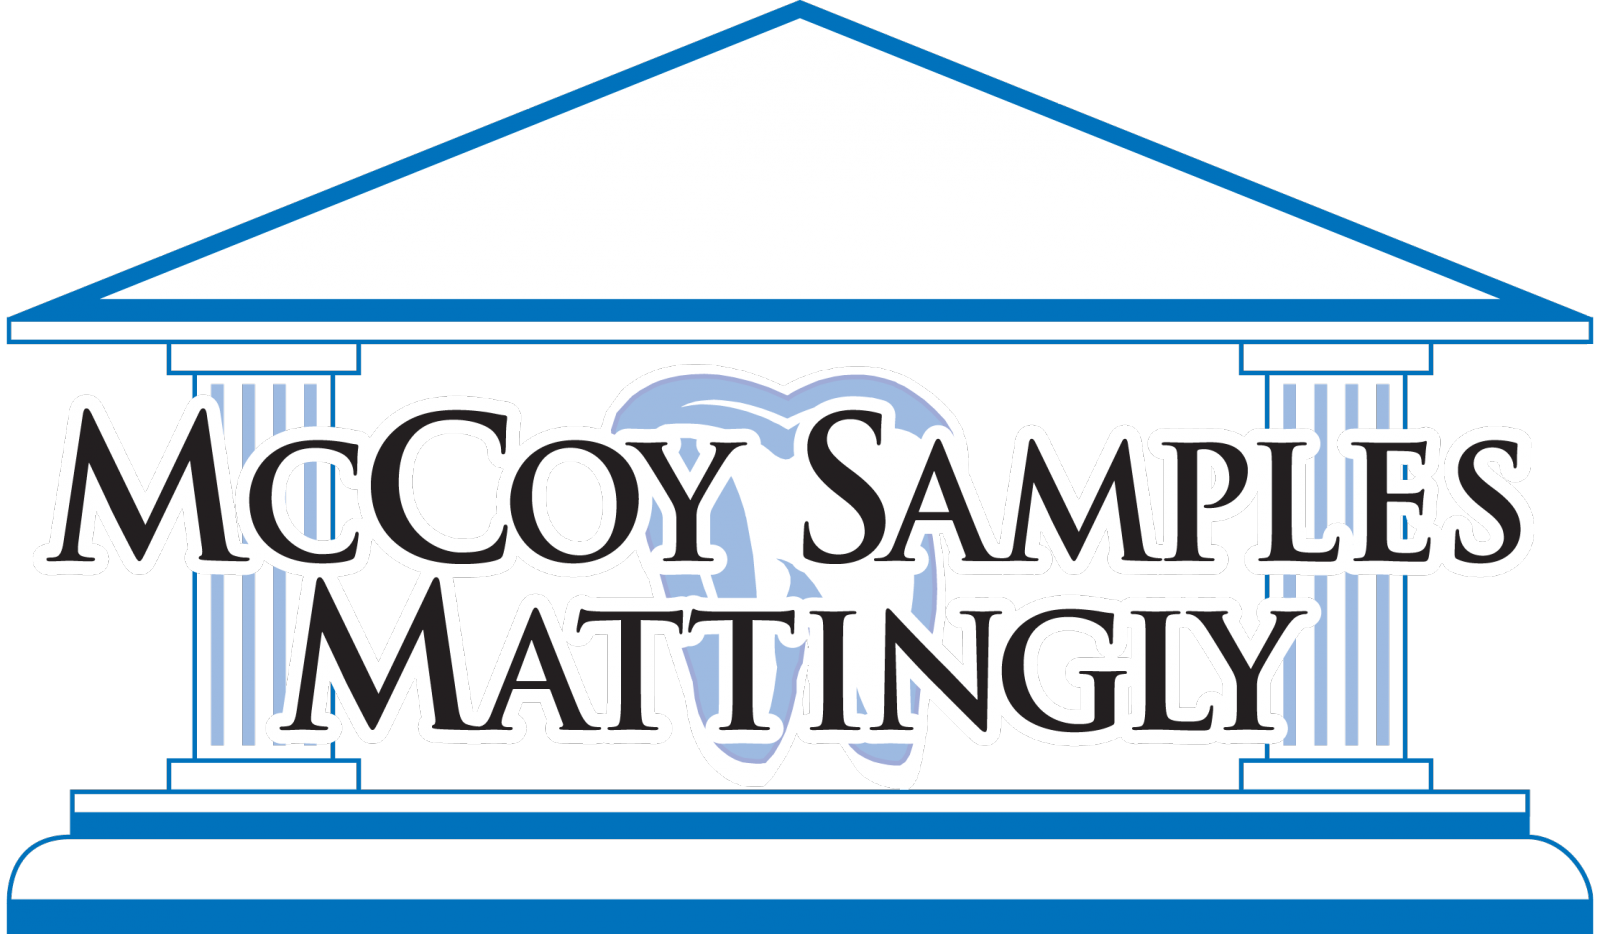 McCoy Samples Mattingly - Chillicothe Dental